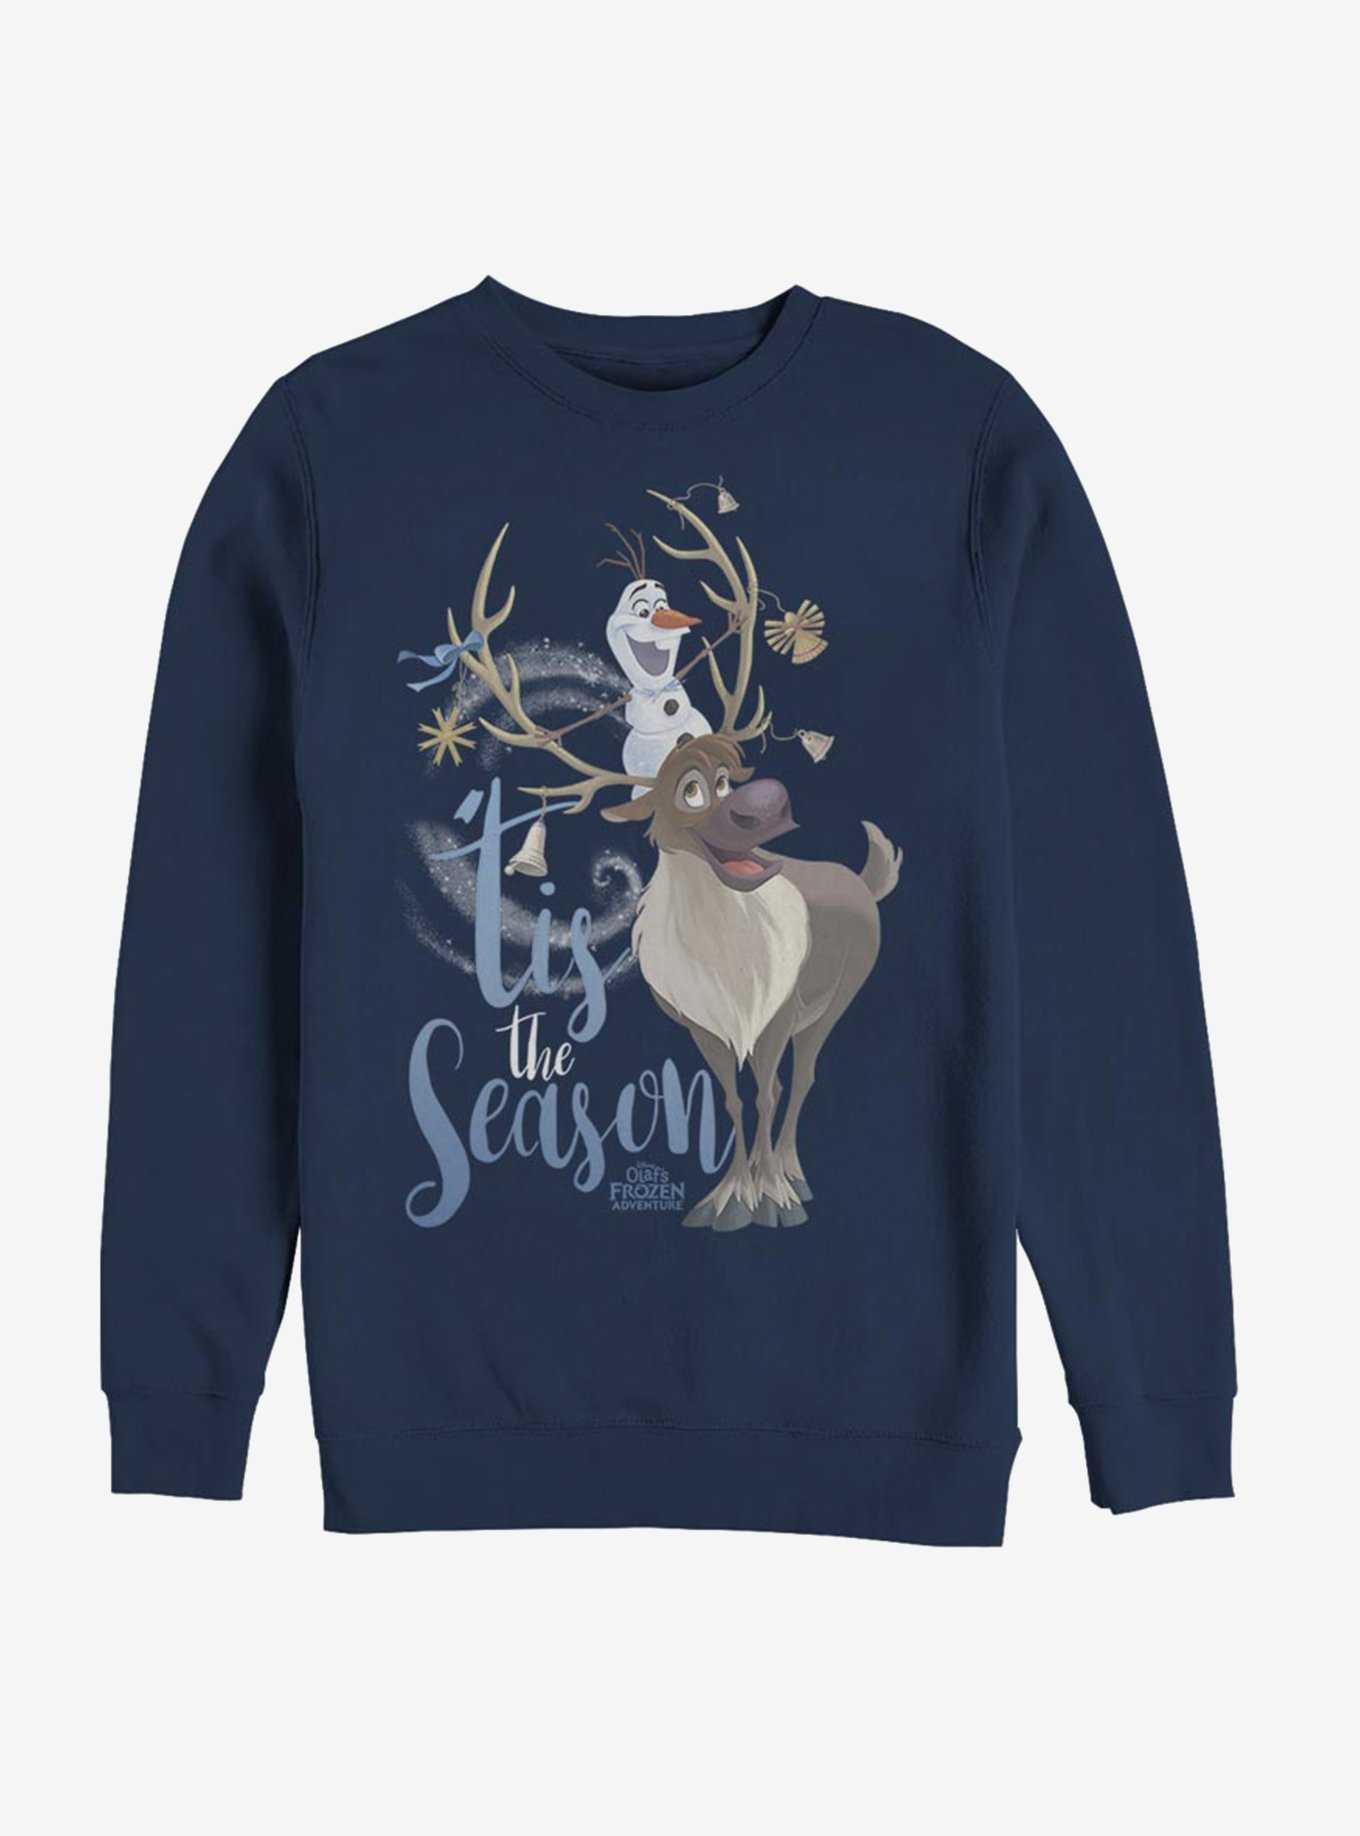 Disney Frozen Olaf Season Sweatshirt, , hi-res